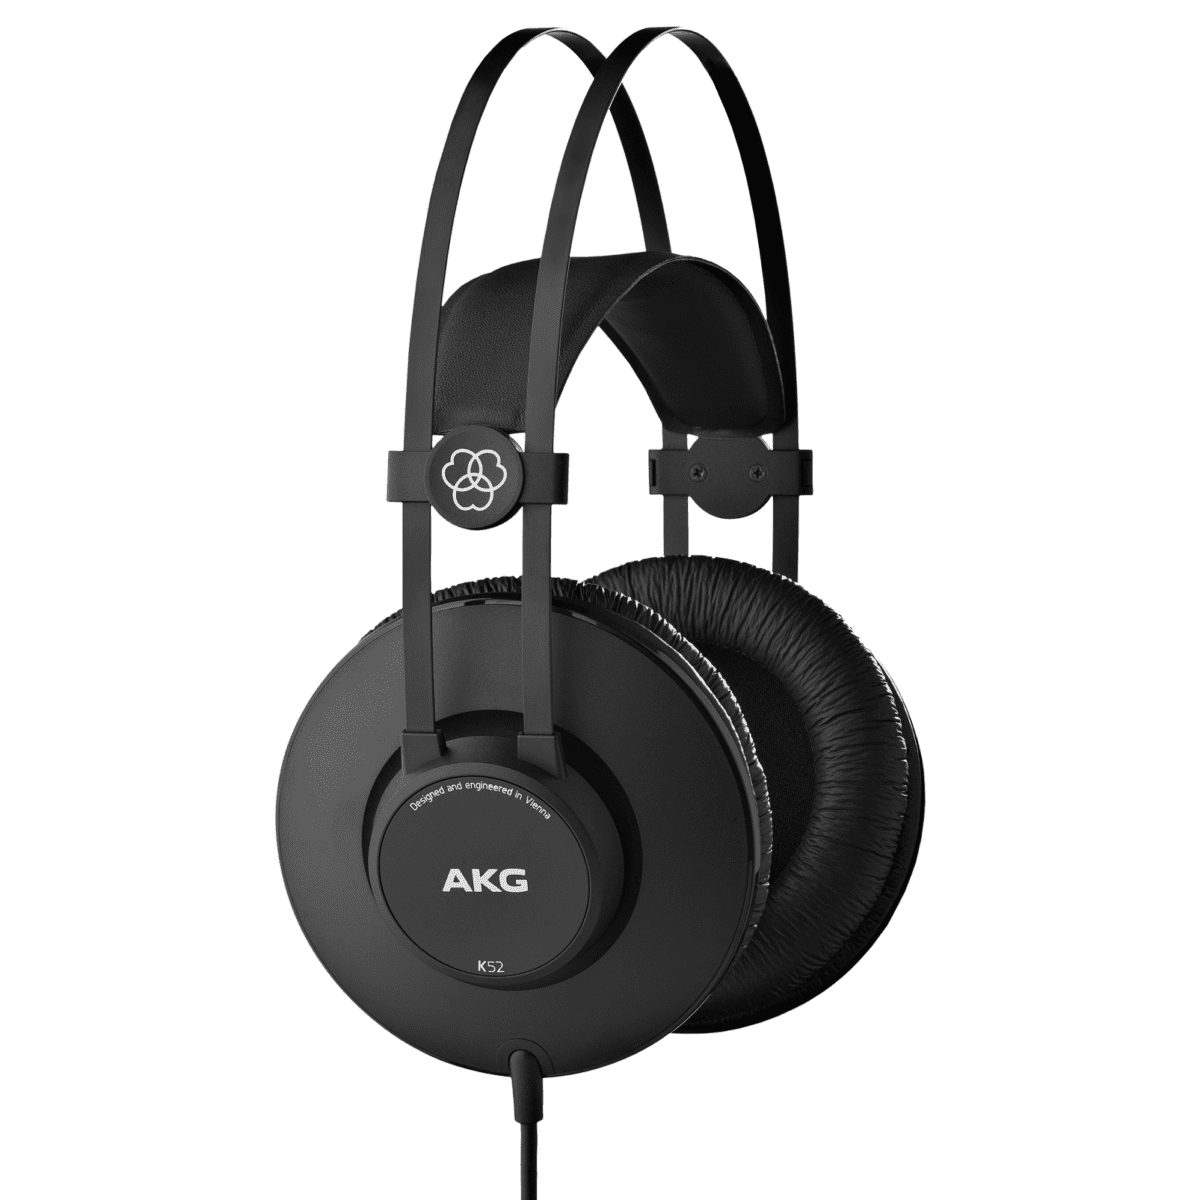 AKG K52 Closed Headphone